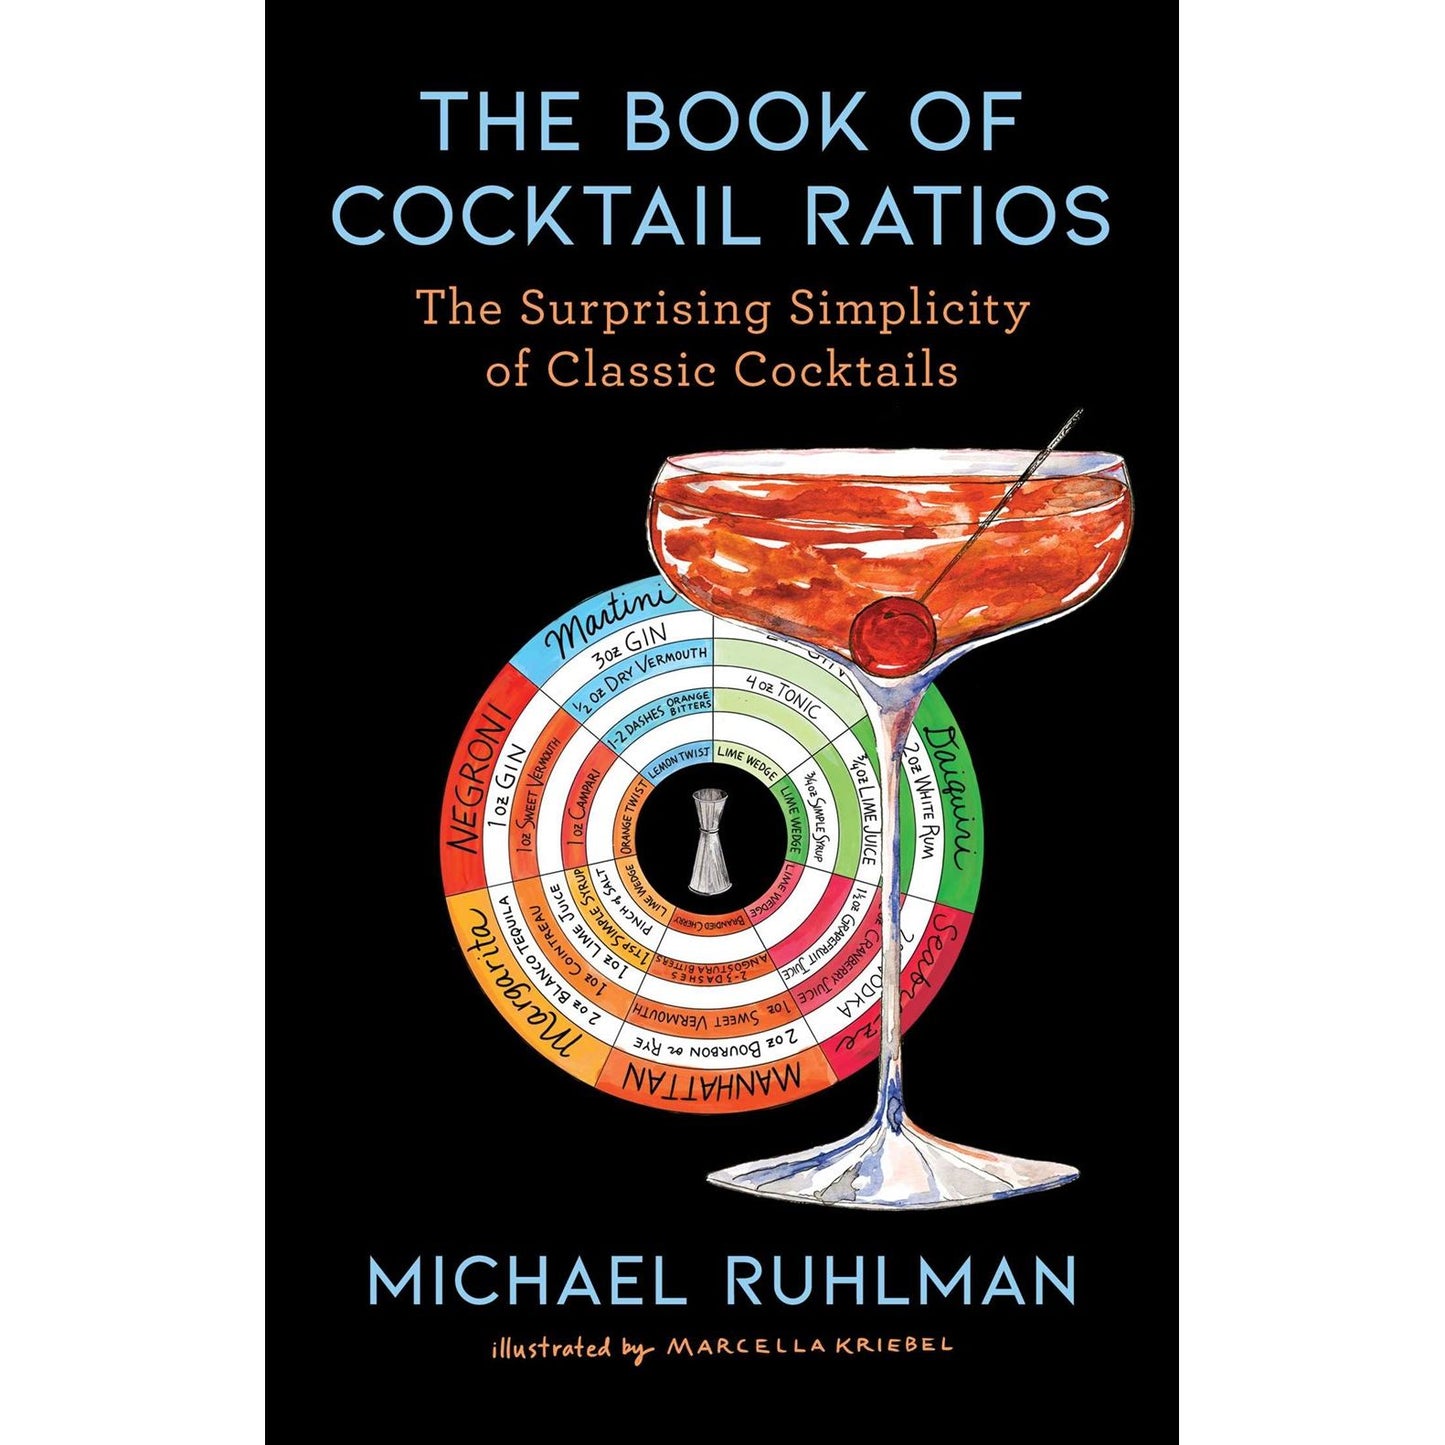 The Book of Cocktail Ratios (Michael Ruhlman)